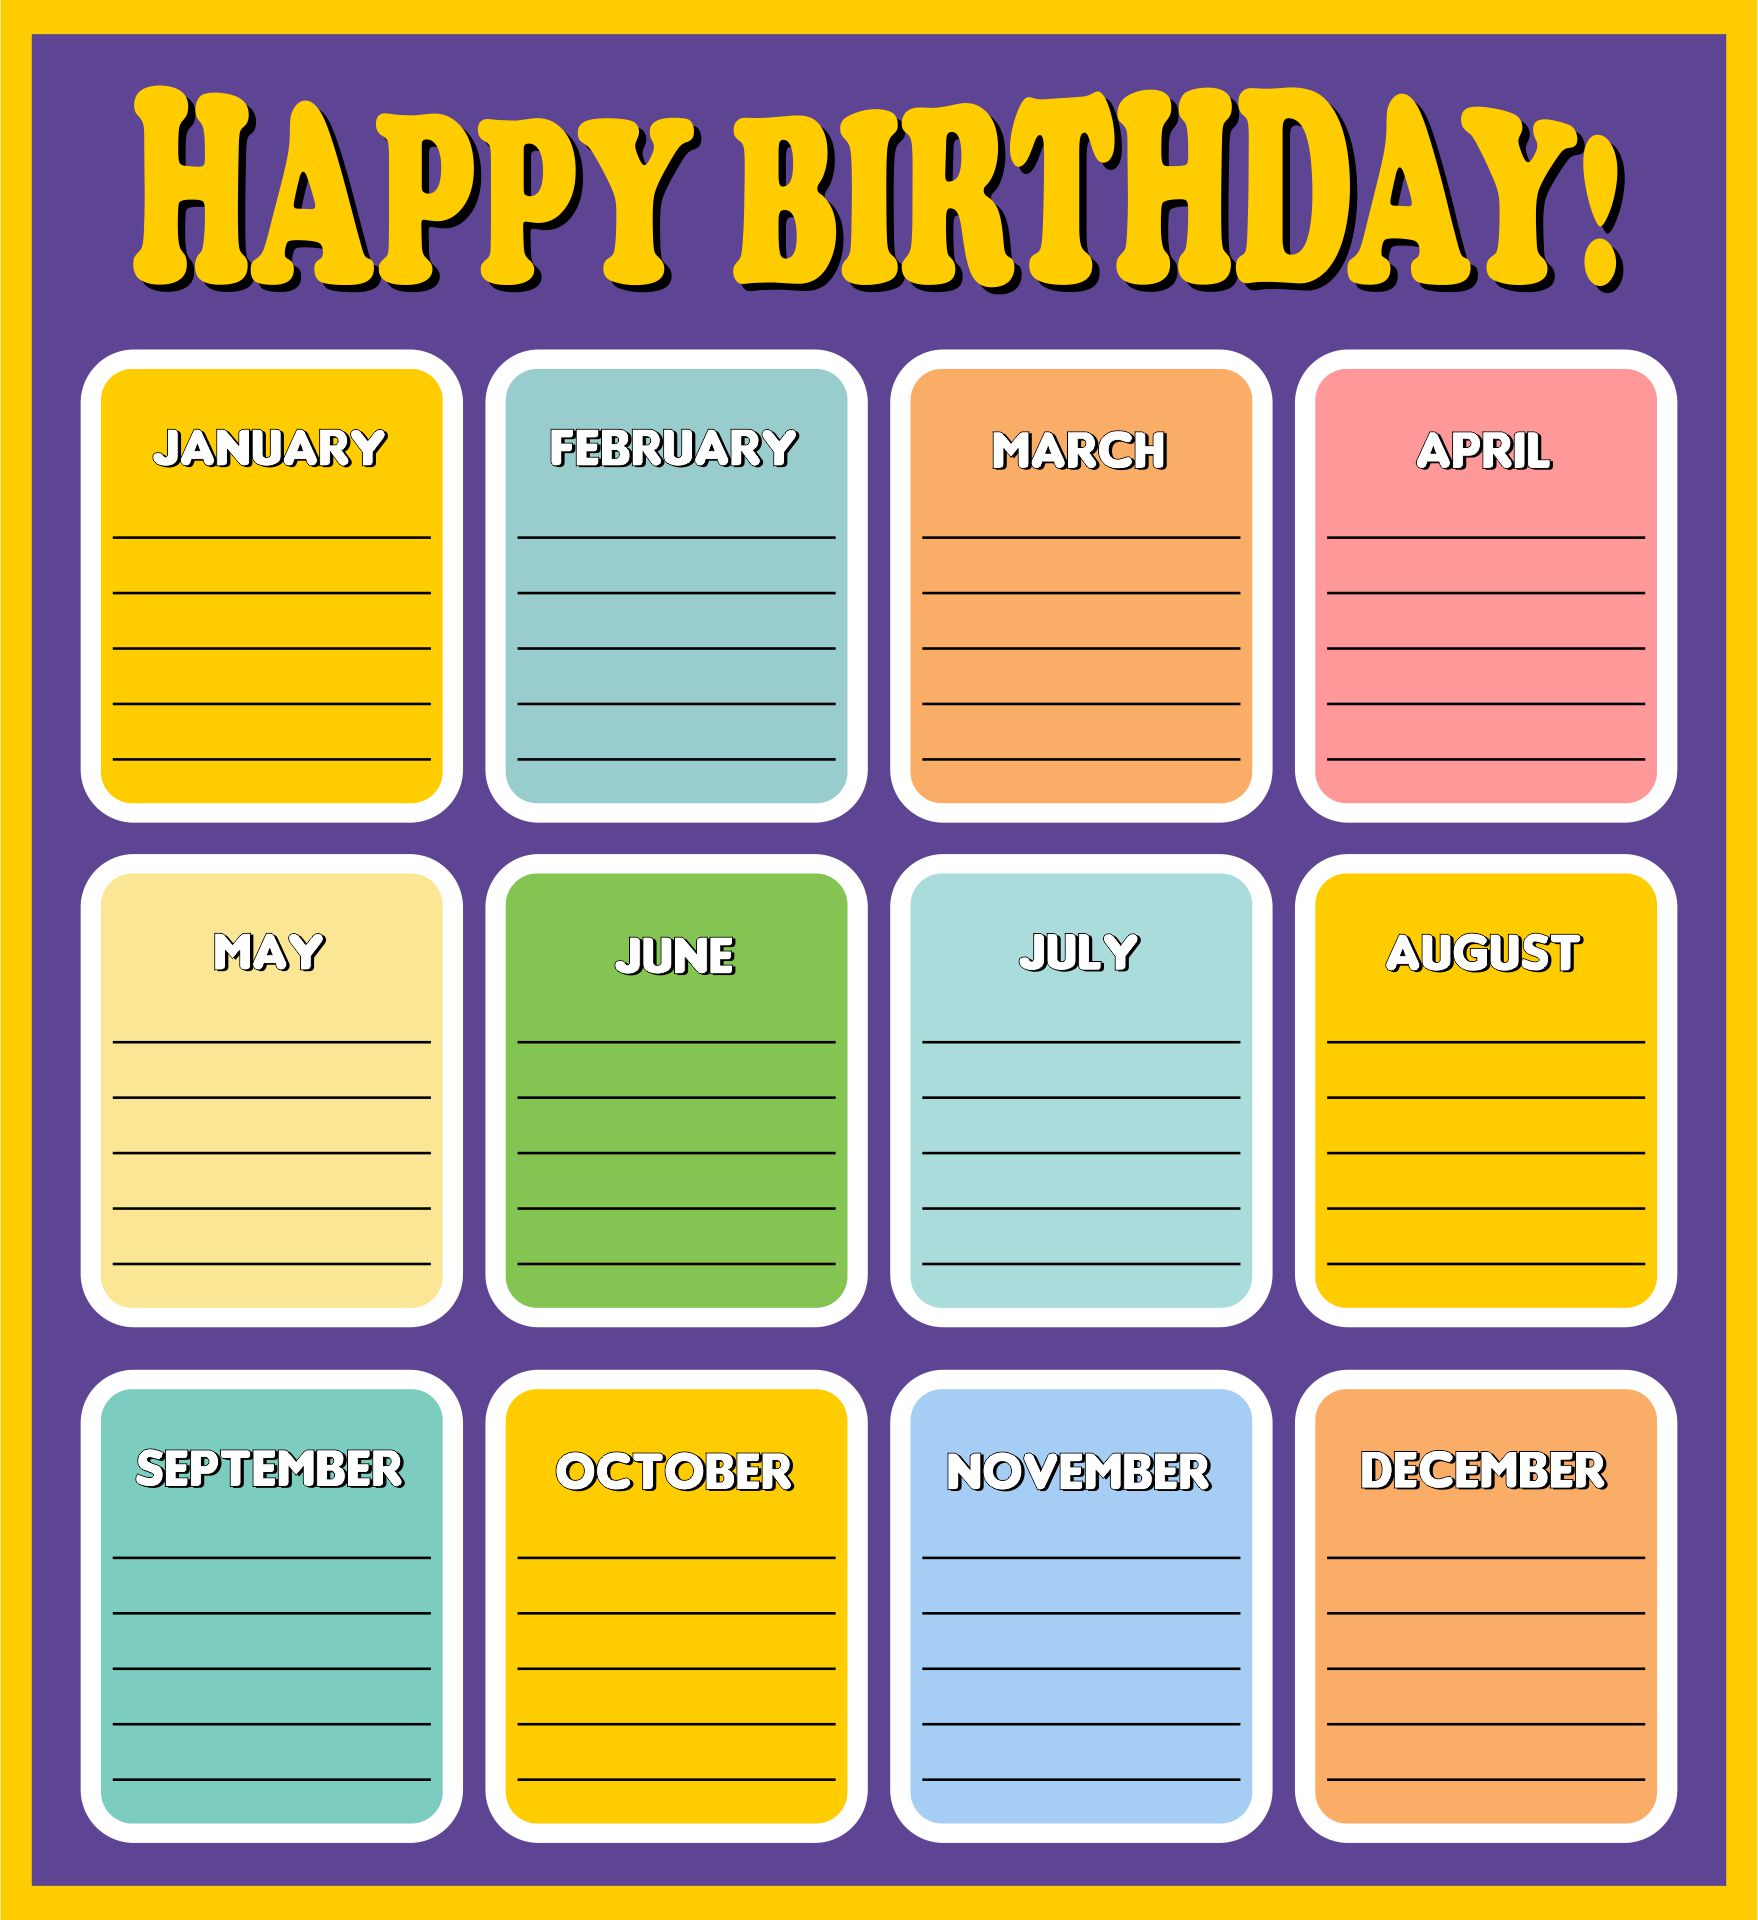 birthday-chart-ideas